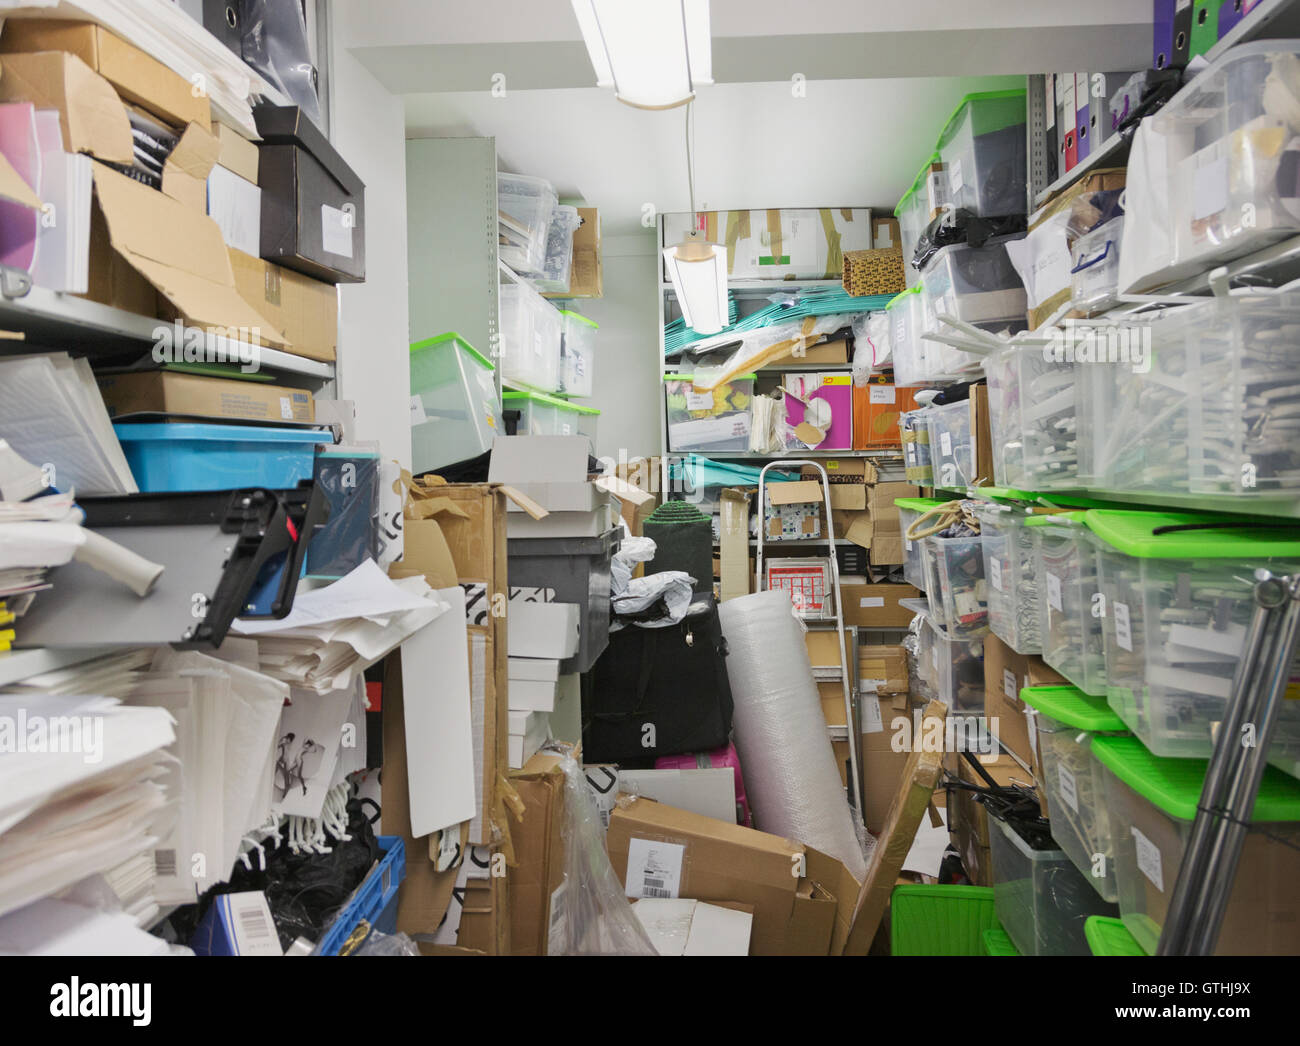 Messy office storage closet Stock Photo